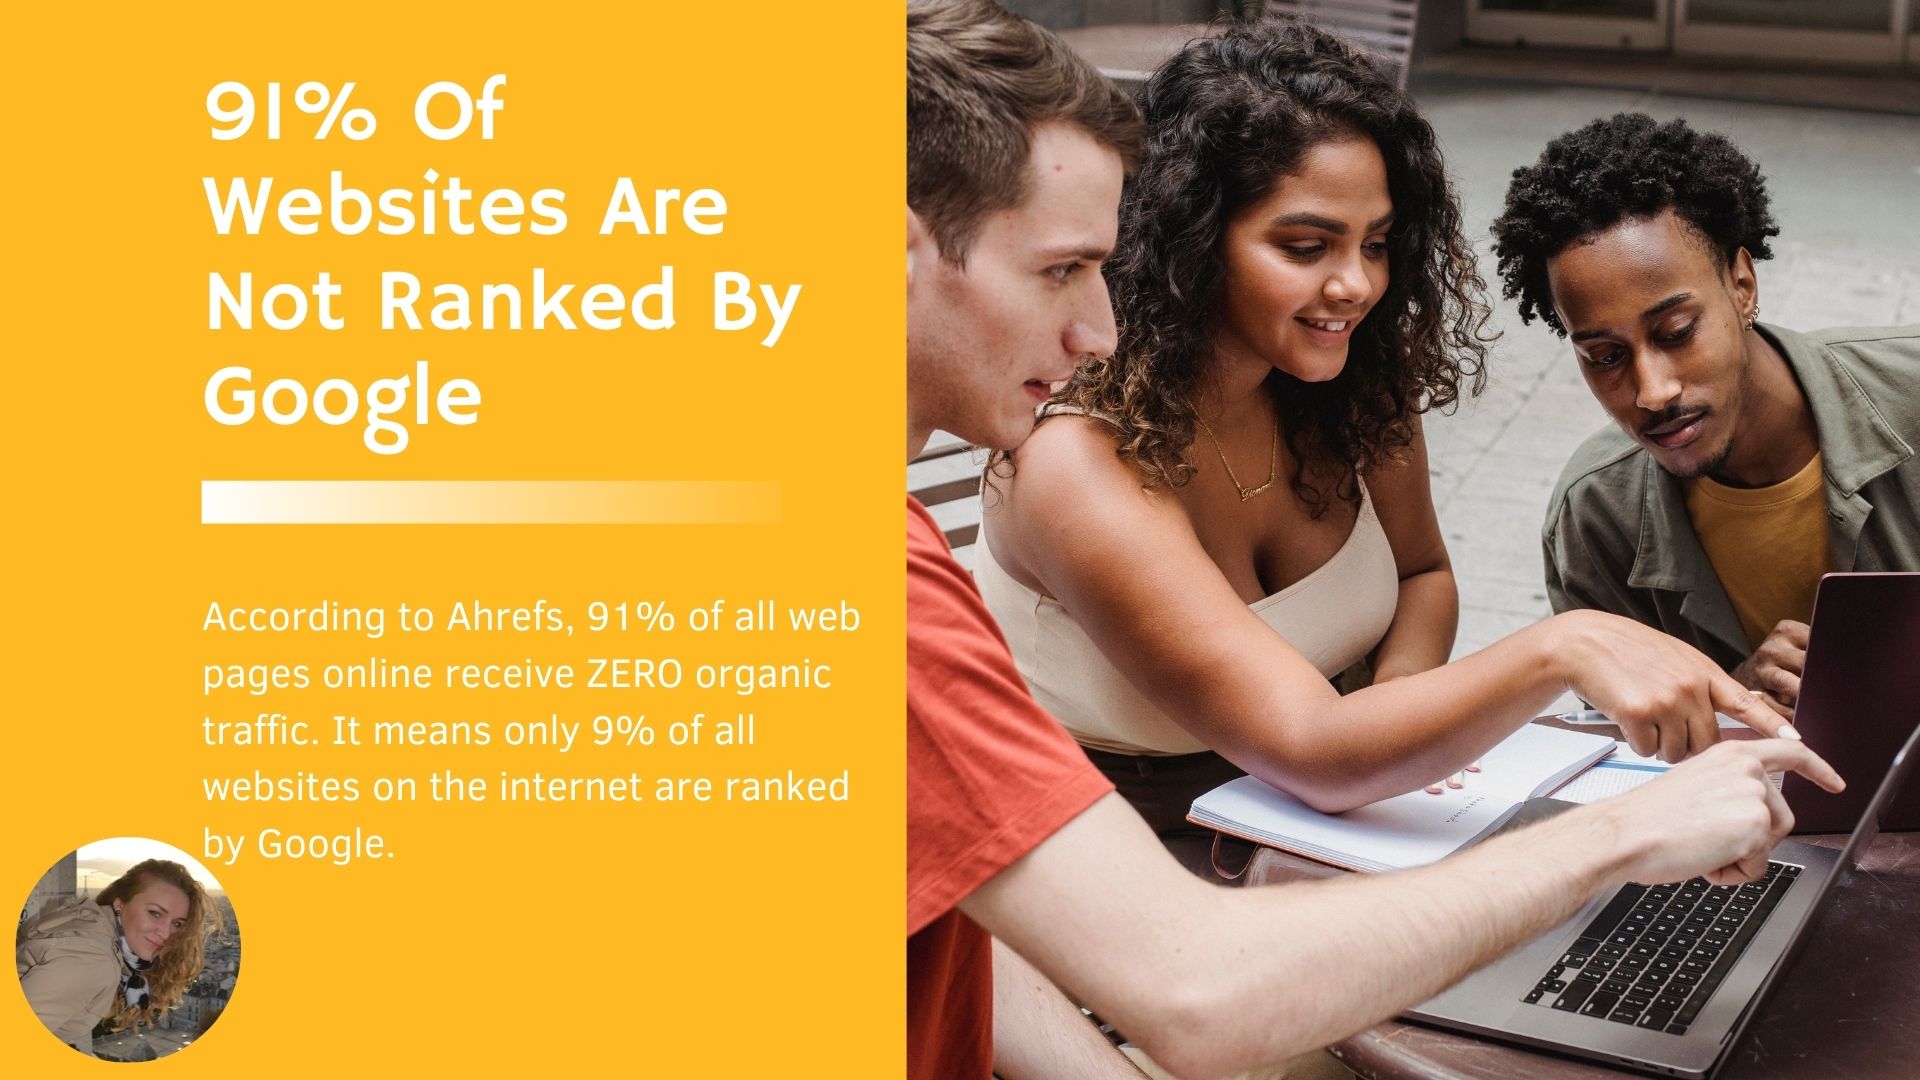 91% 📈 of all websites receive ZERO organic traffic online